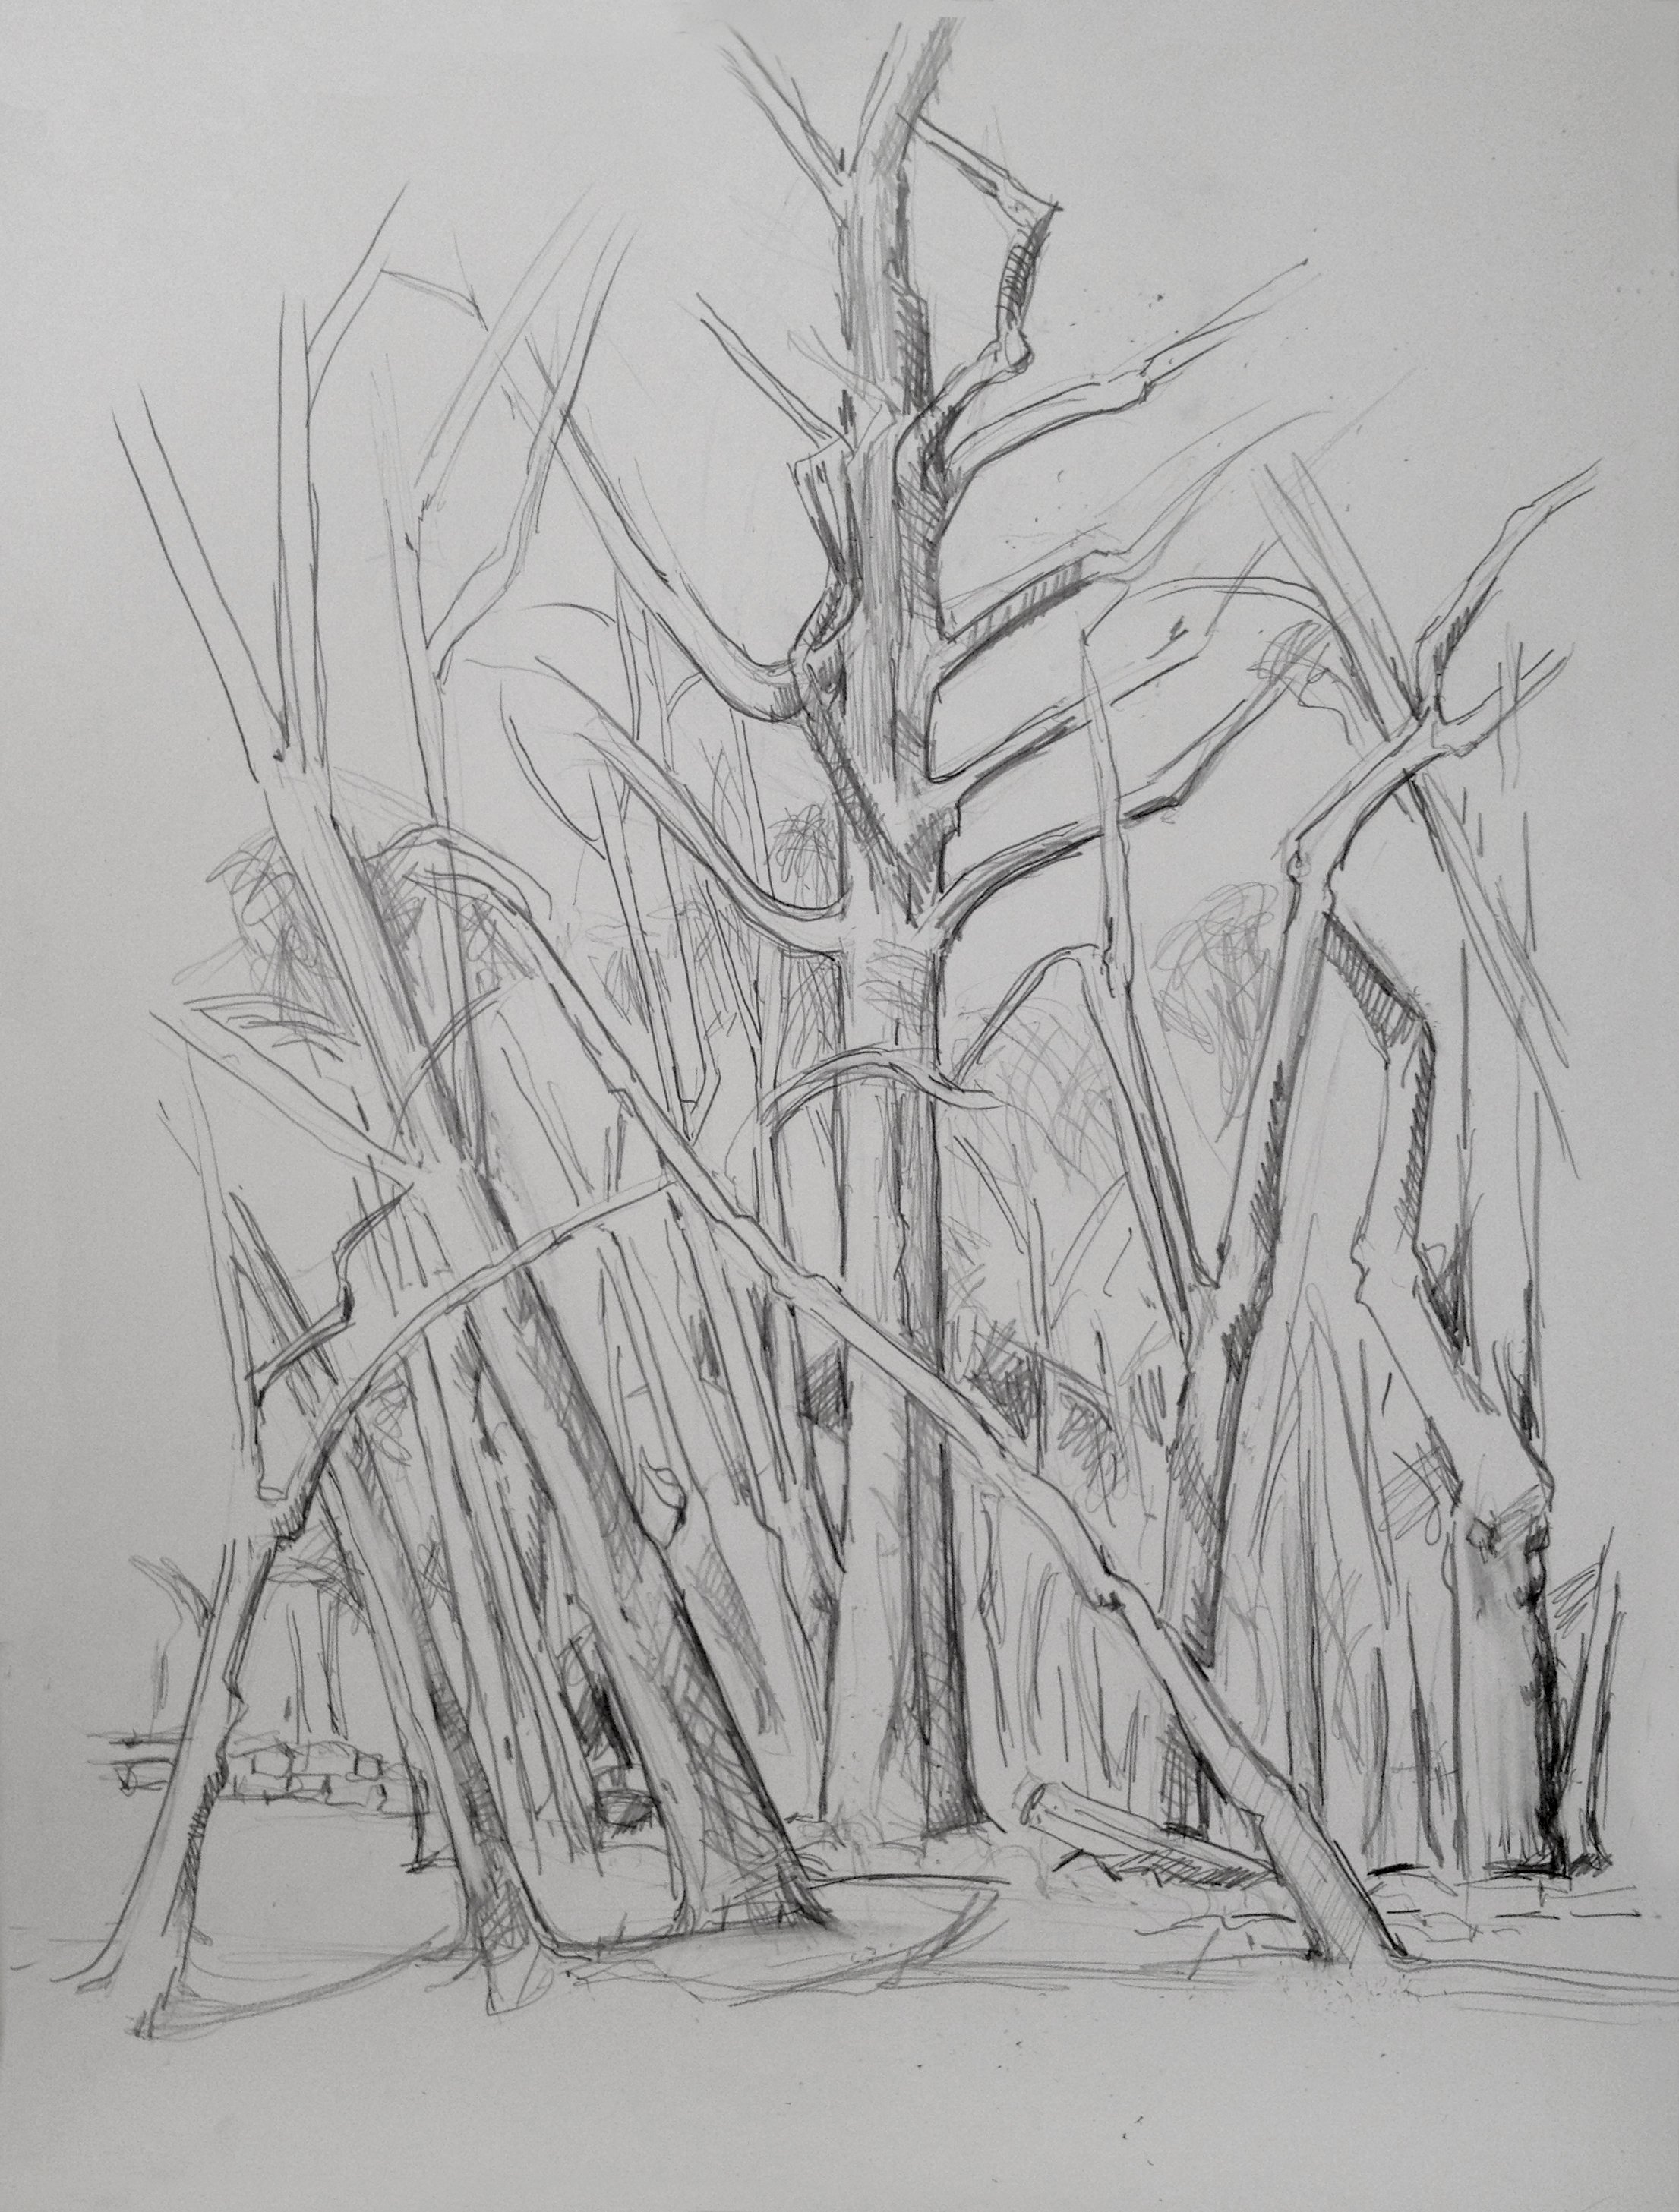    Backyard Trees, winter,   graphite, 24 x 19 in, 2016 